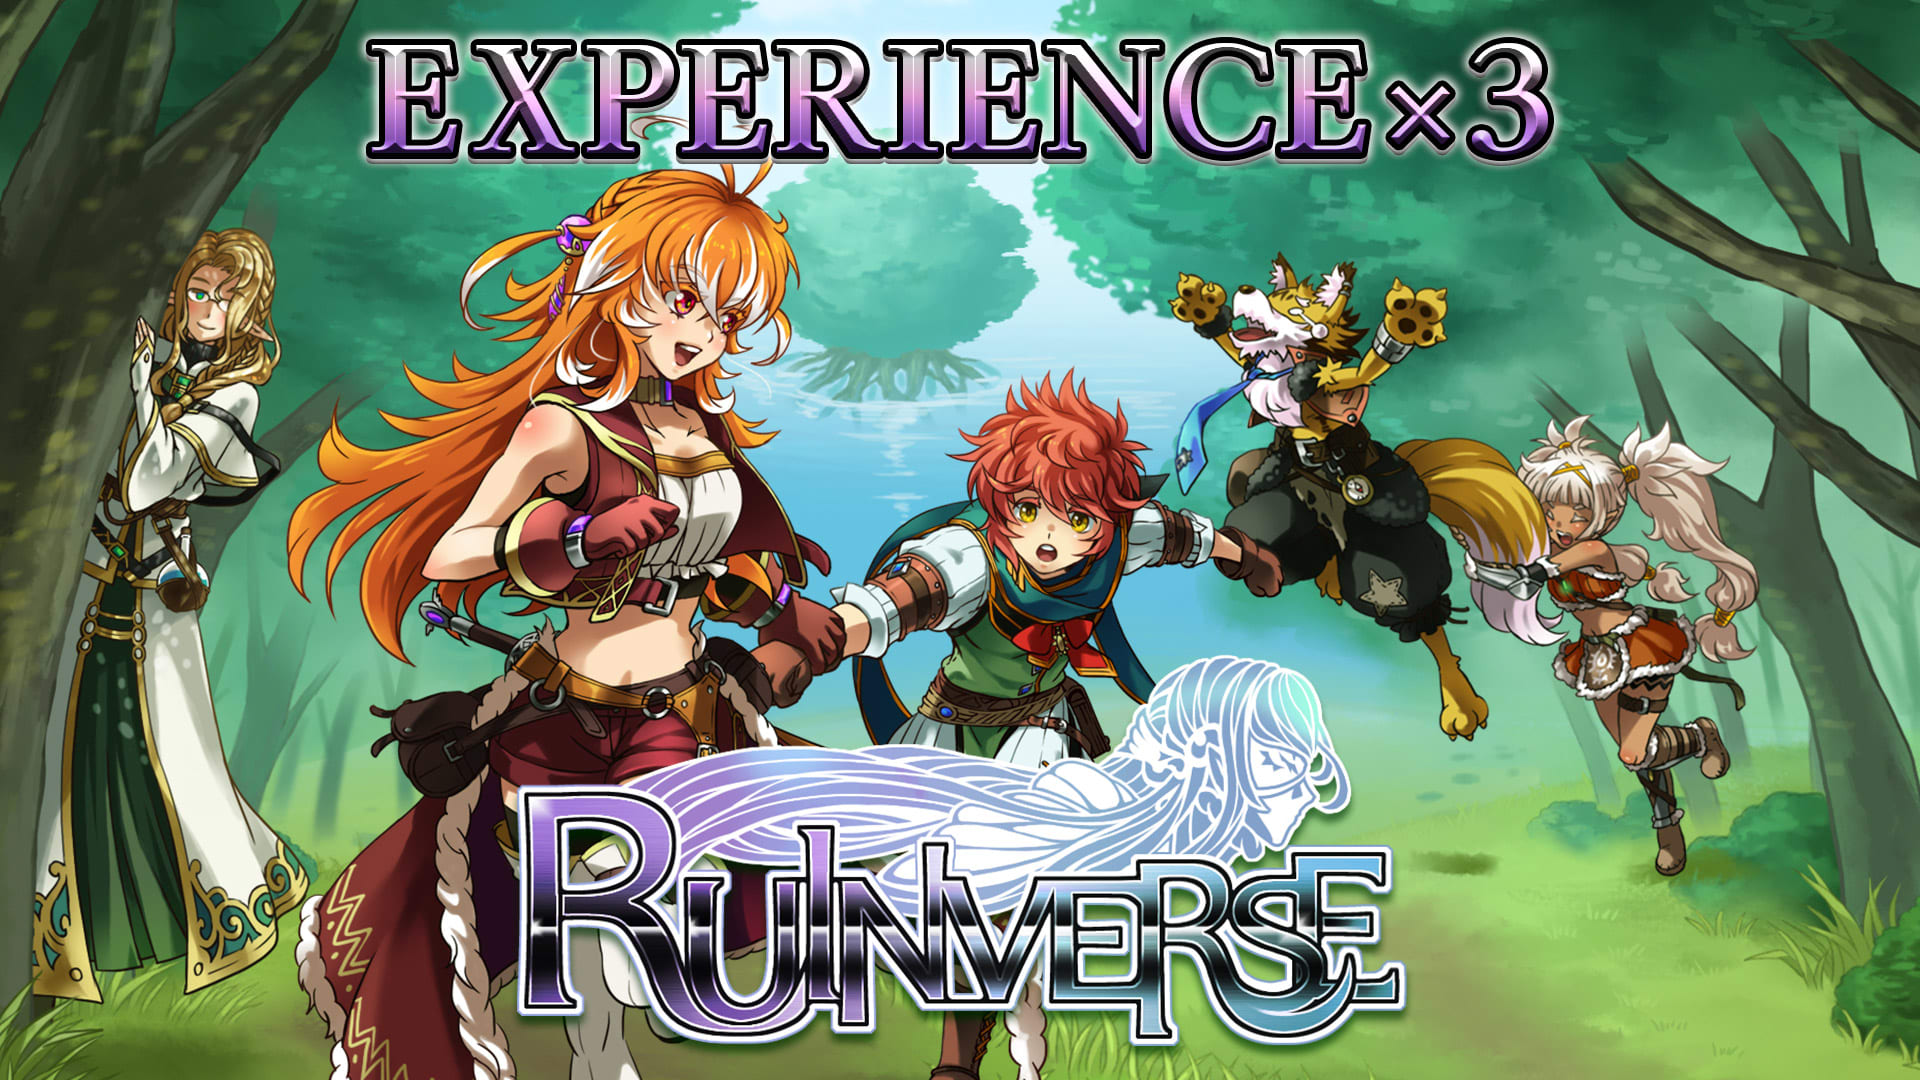 Experience x3 - Ruinverse